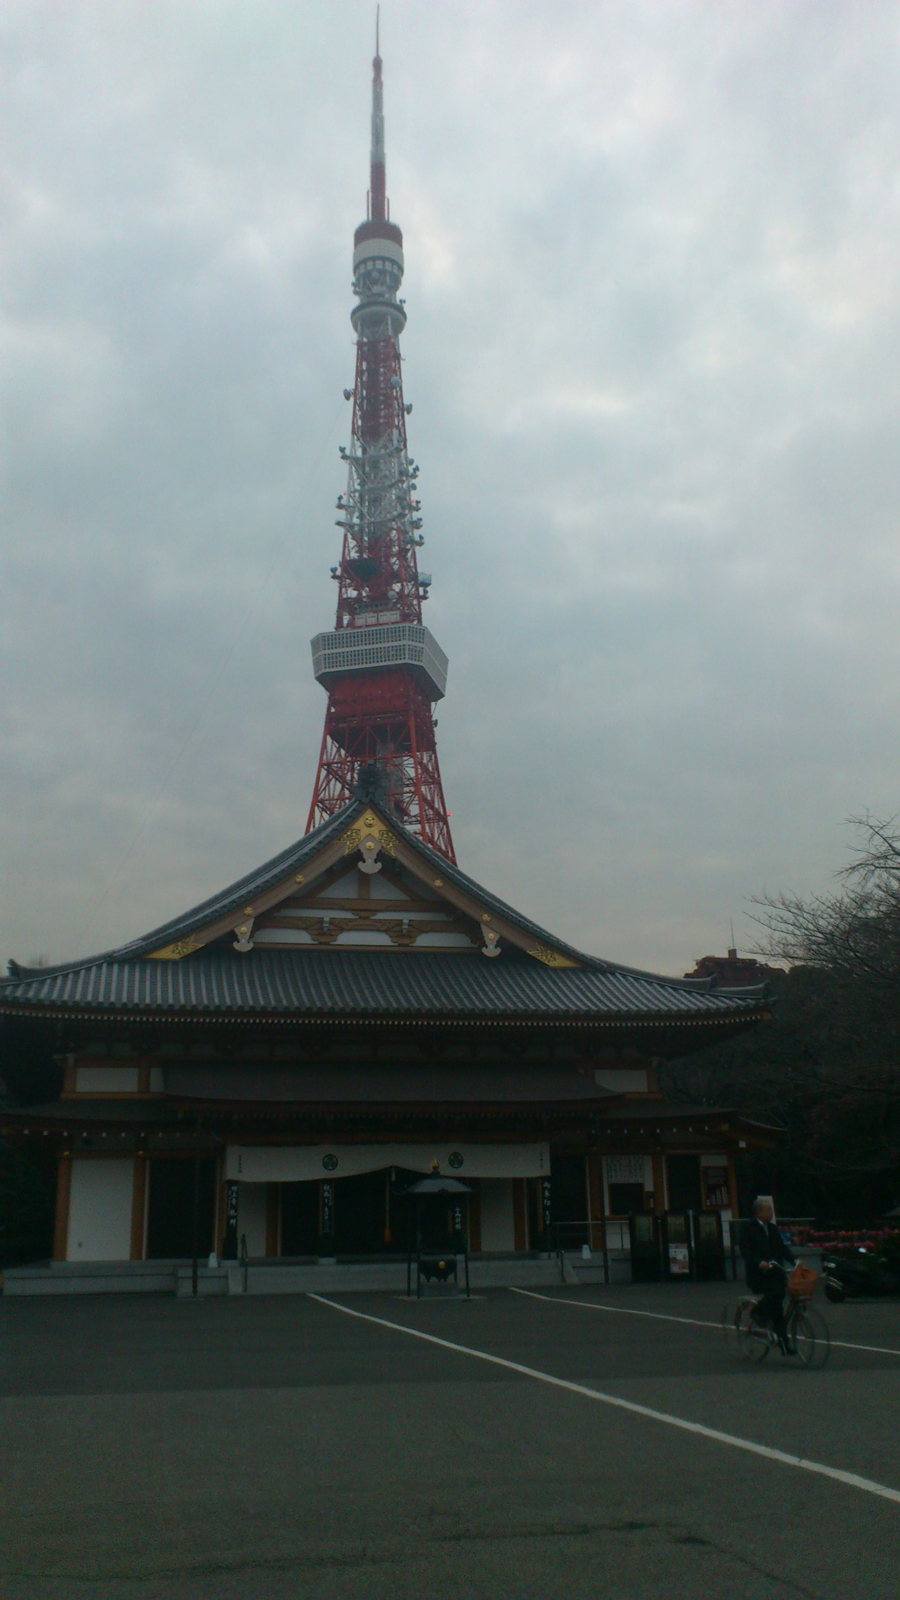 Juxtapose to a higher level, Zojoji Temple, Tokyo